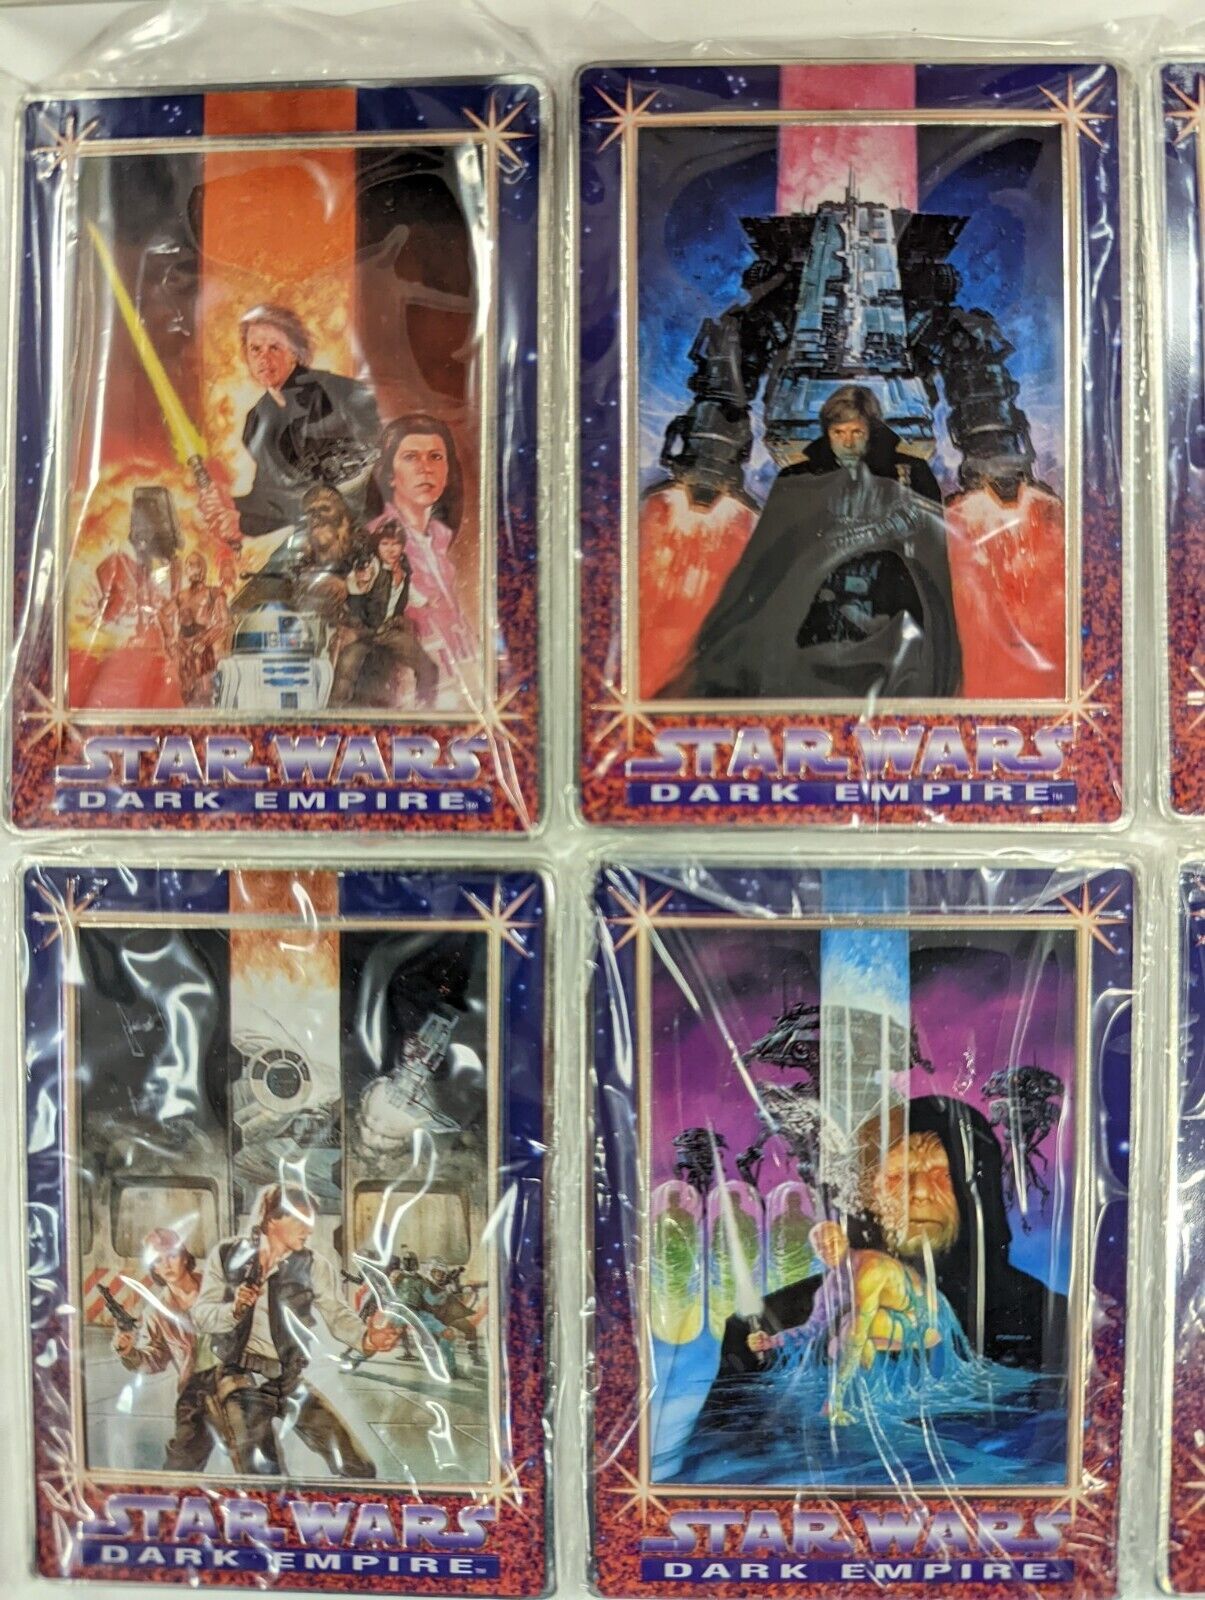 Star Wars Dark Empire Embossed Metal Collector Cards Metallic Impressions